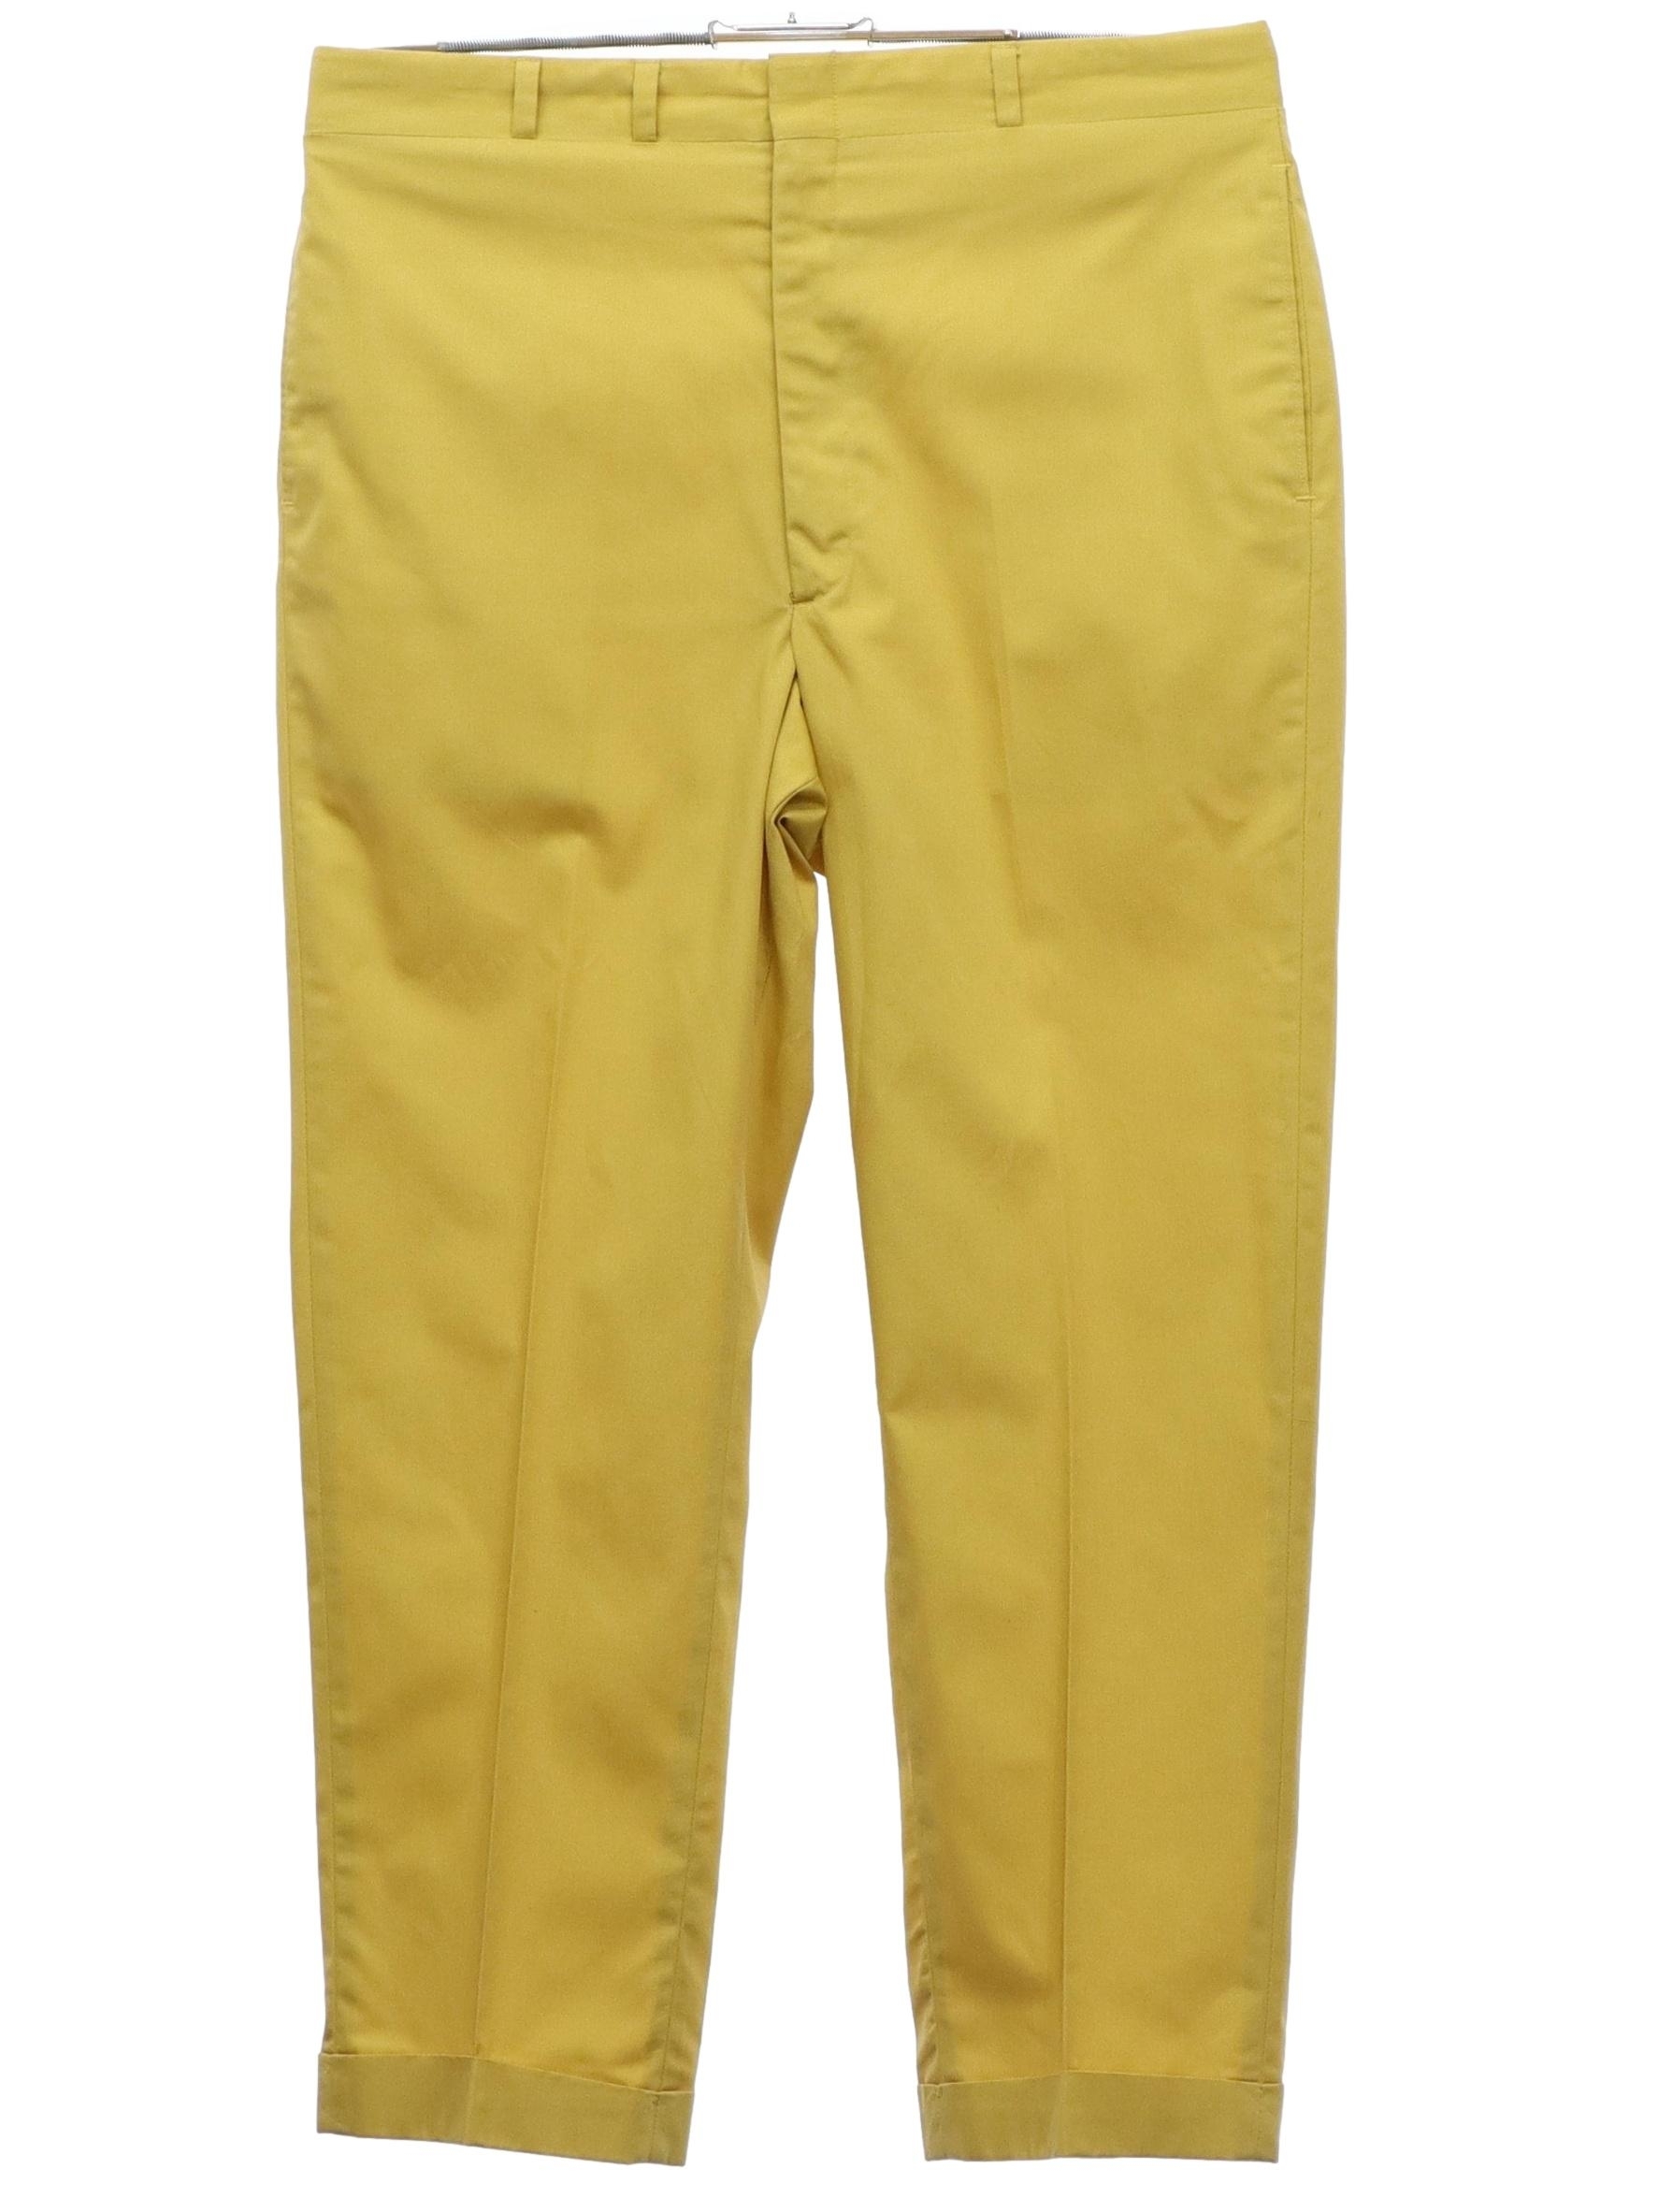 Relco Mens Tweed Multi Check Sta-Press Mod Golf Trousers - Retro Star